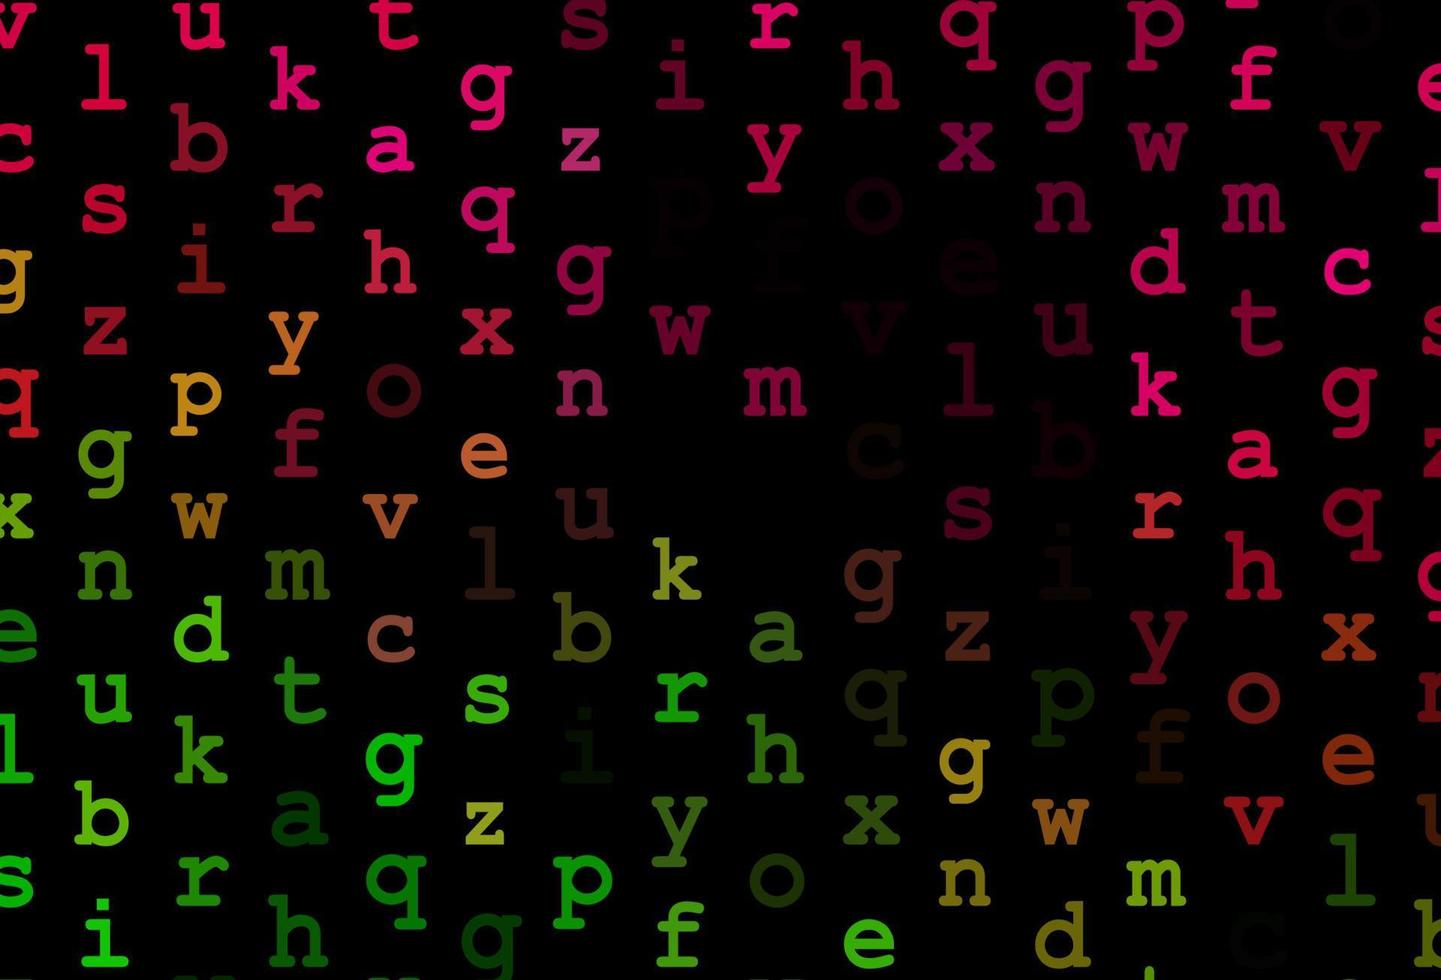 textura vector rosa e verde escuro com caracteres abc.